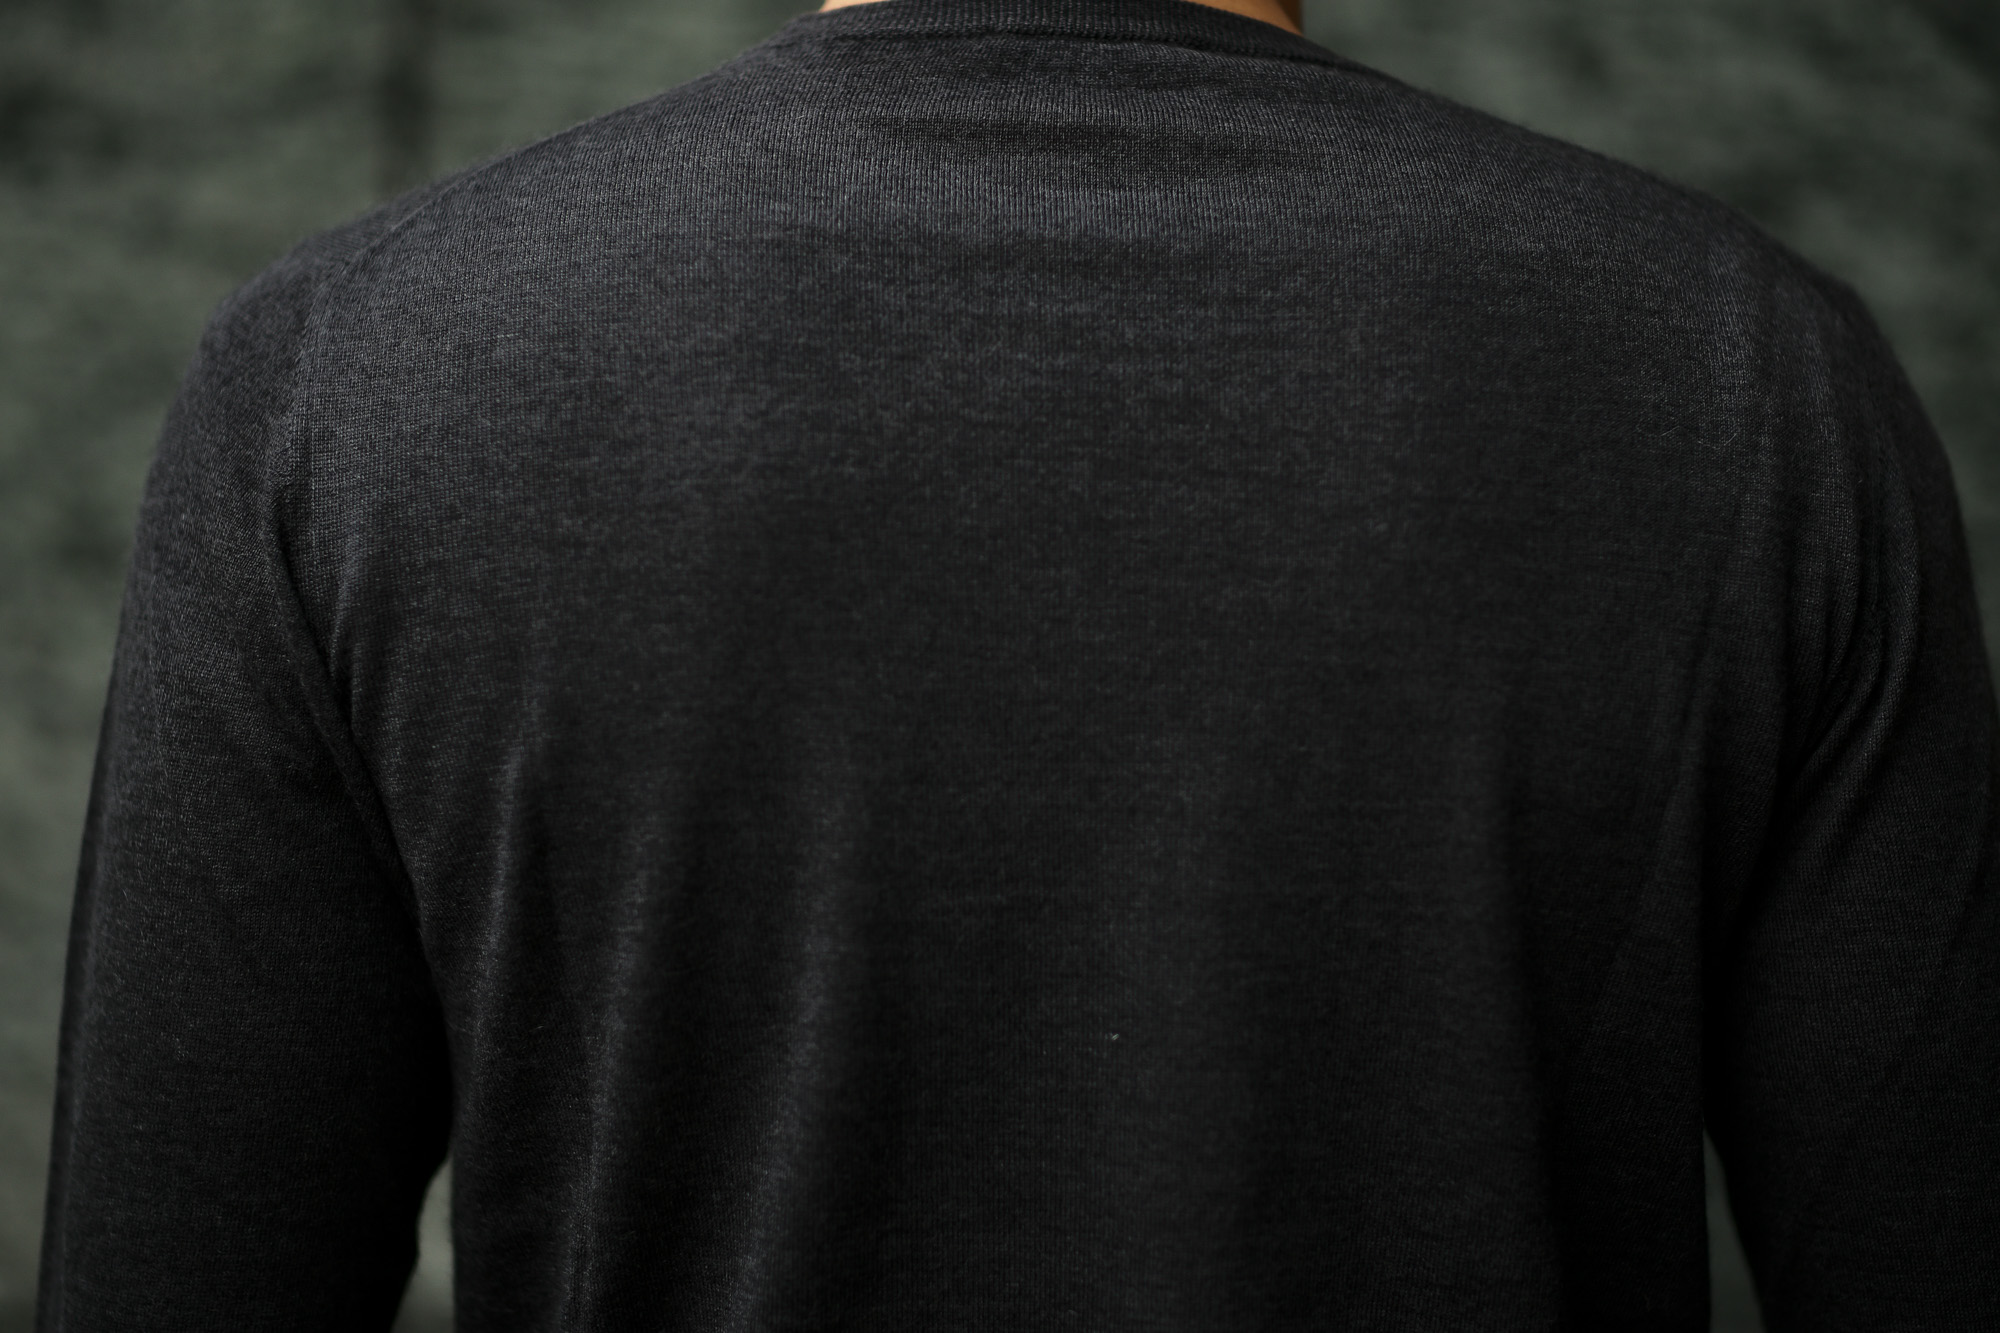 ZANONE(ザノーネ) Cashmere Crew Neck Sweater (カシミア クルーネック セーター) 18ゲージ カシミア ニット セーター CHARCOAL (チャコール・Z4944) made in italy (イタリア製) 2019 秋冬新作  愛知 名古屋 altoediritto アルトエデリット